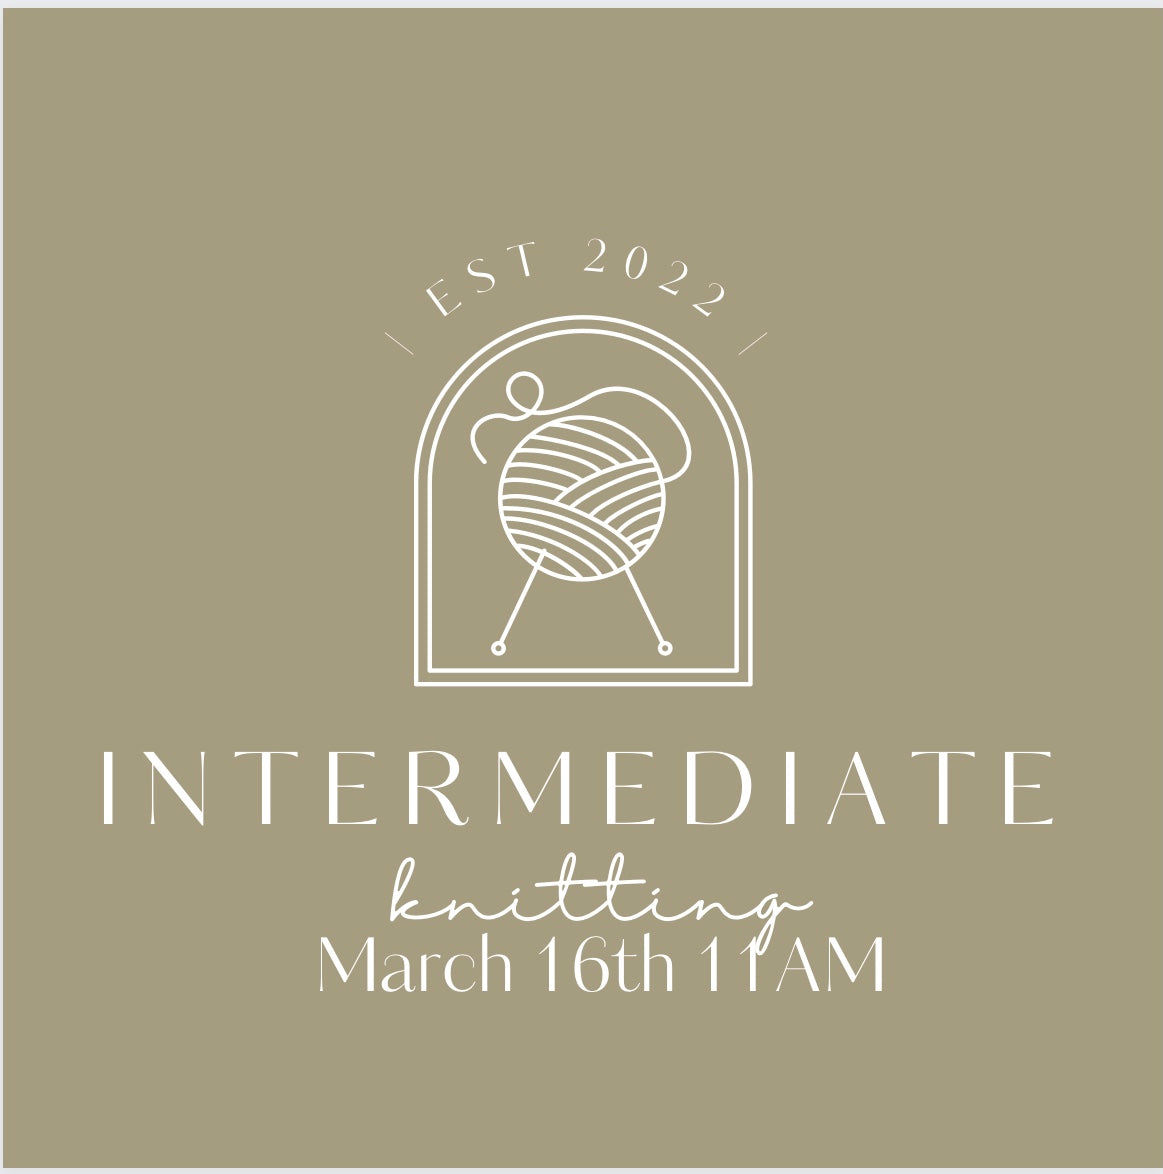 Intermediate Knitting * Saturday March 16th * 11:00 AM